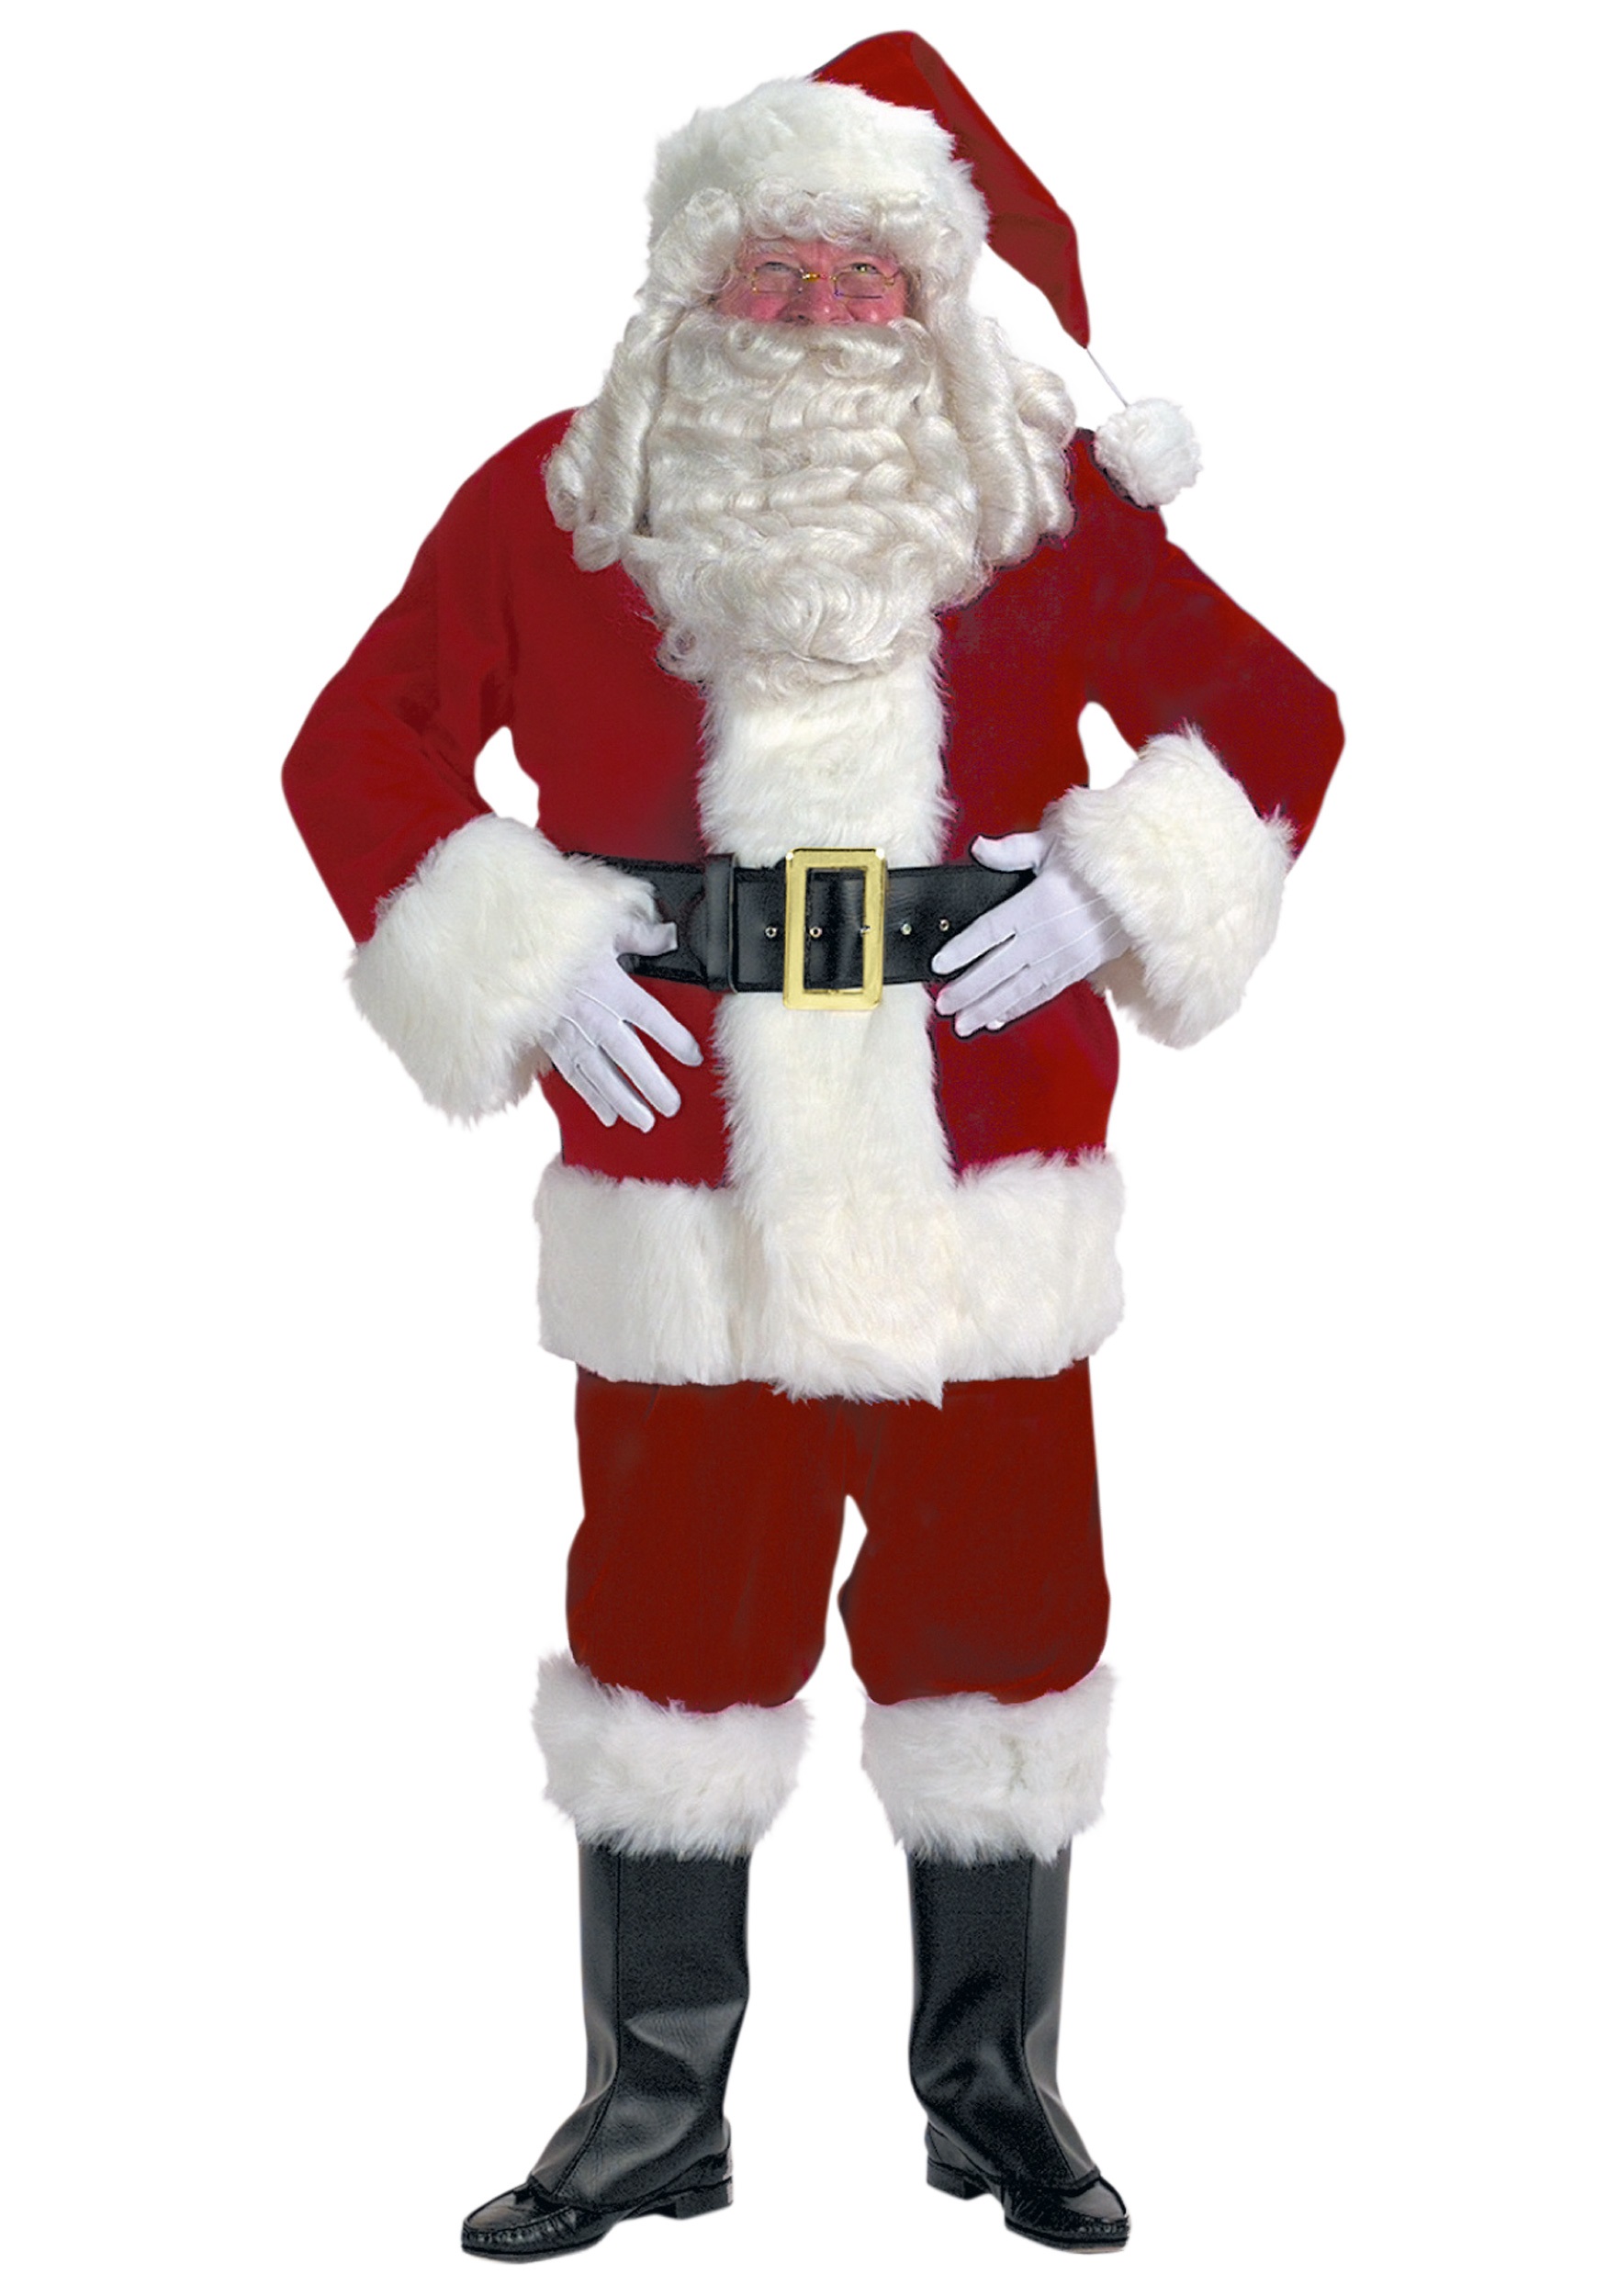 Santa Claus Costume Rental